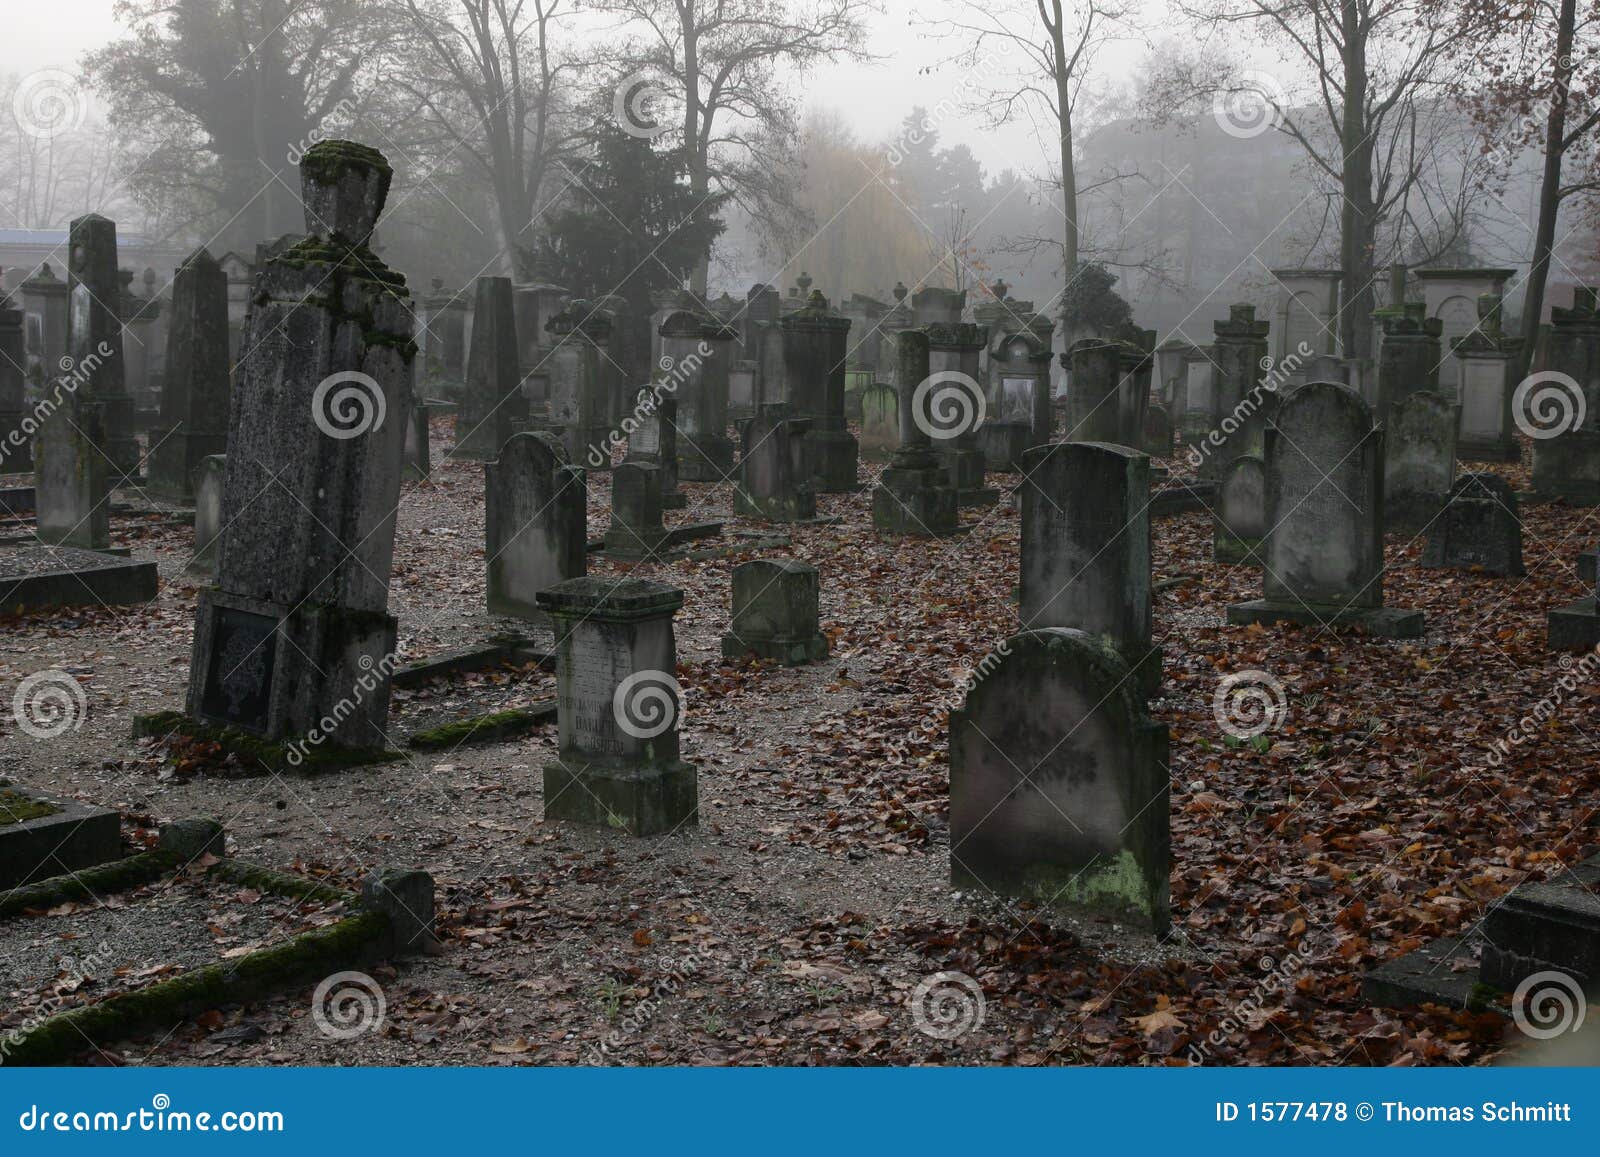 a graveyard